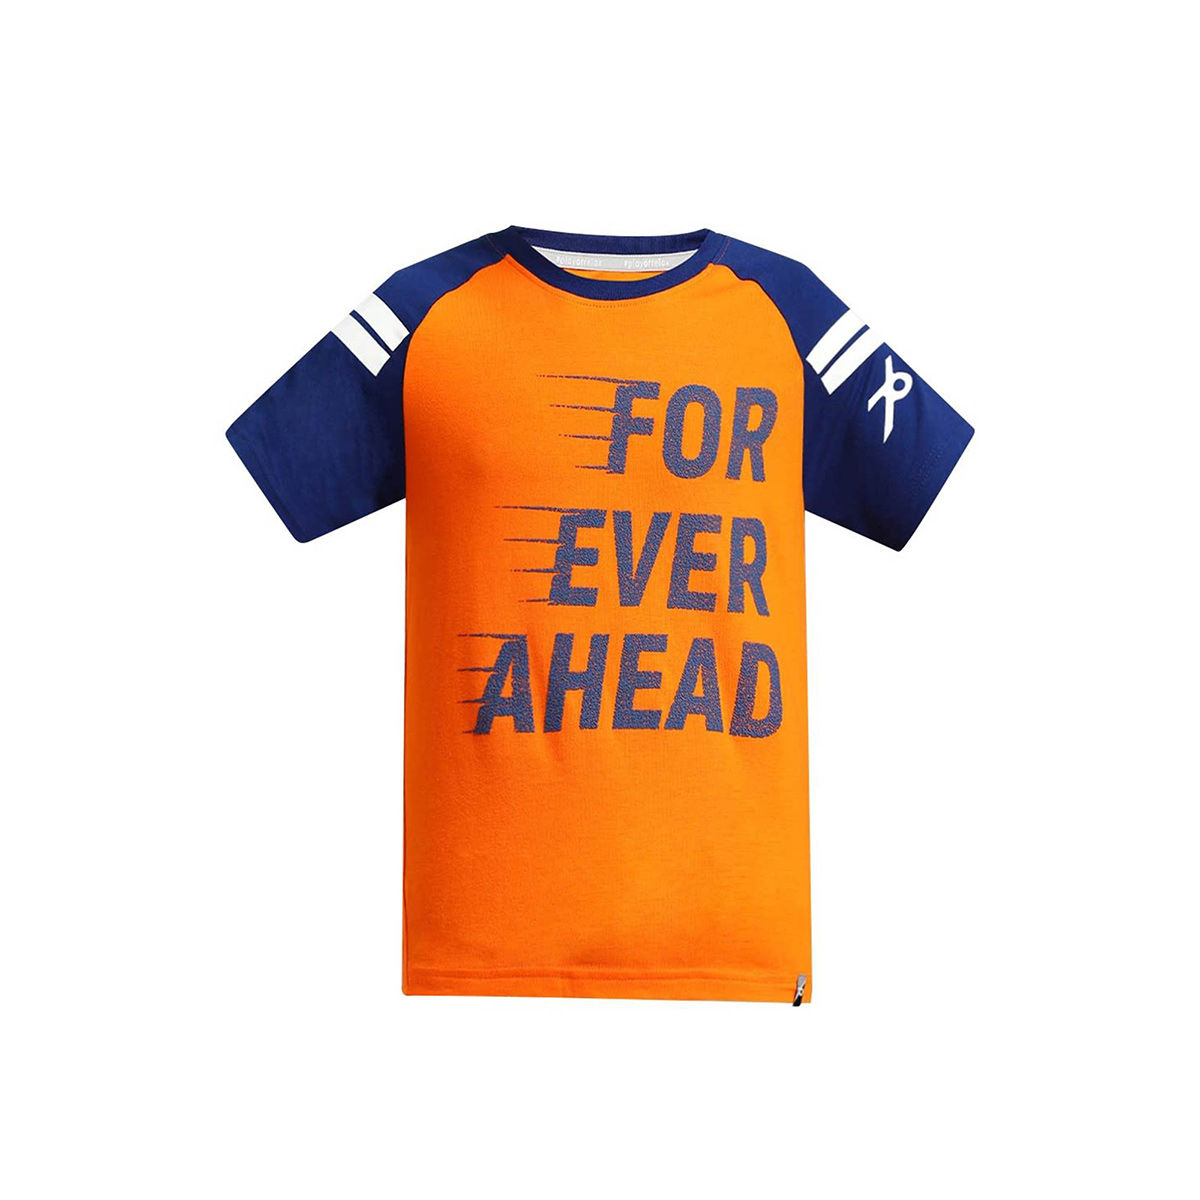 Jockey Juniors Solid T-shirt - Orange: Buy Jockey Juniors Solid T-shirt - Orange at Price in India | Nykaa